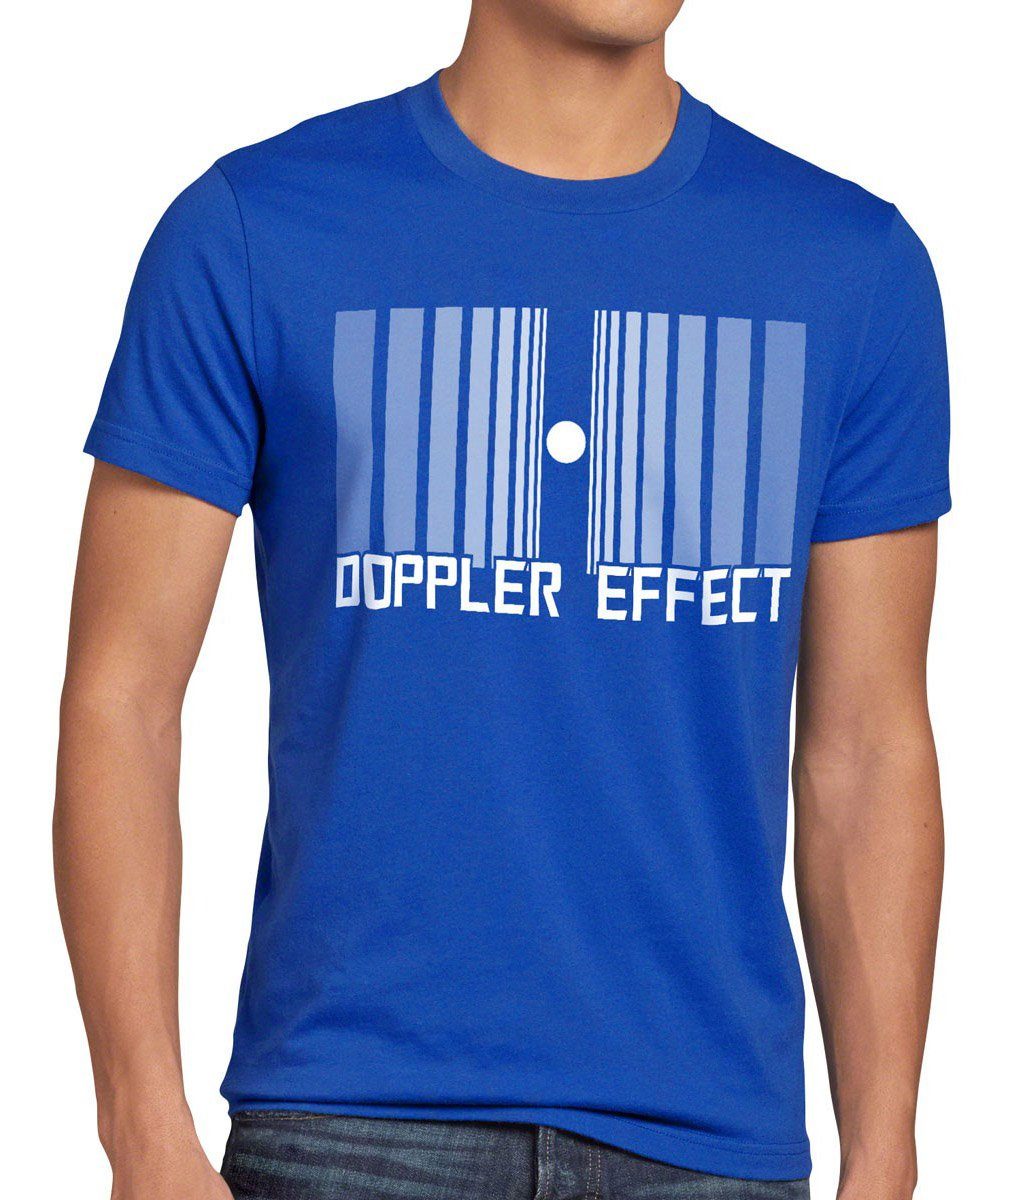 blau Herren Sheldon Big Cooper Effekt style3 Doppler Schall Print-Shirt Bang tbbt T-Shirt Theory Effect